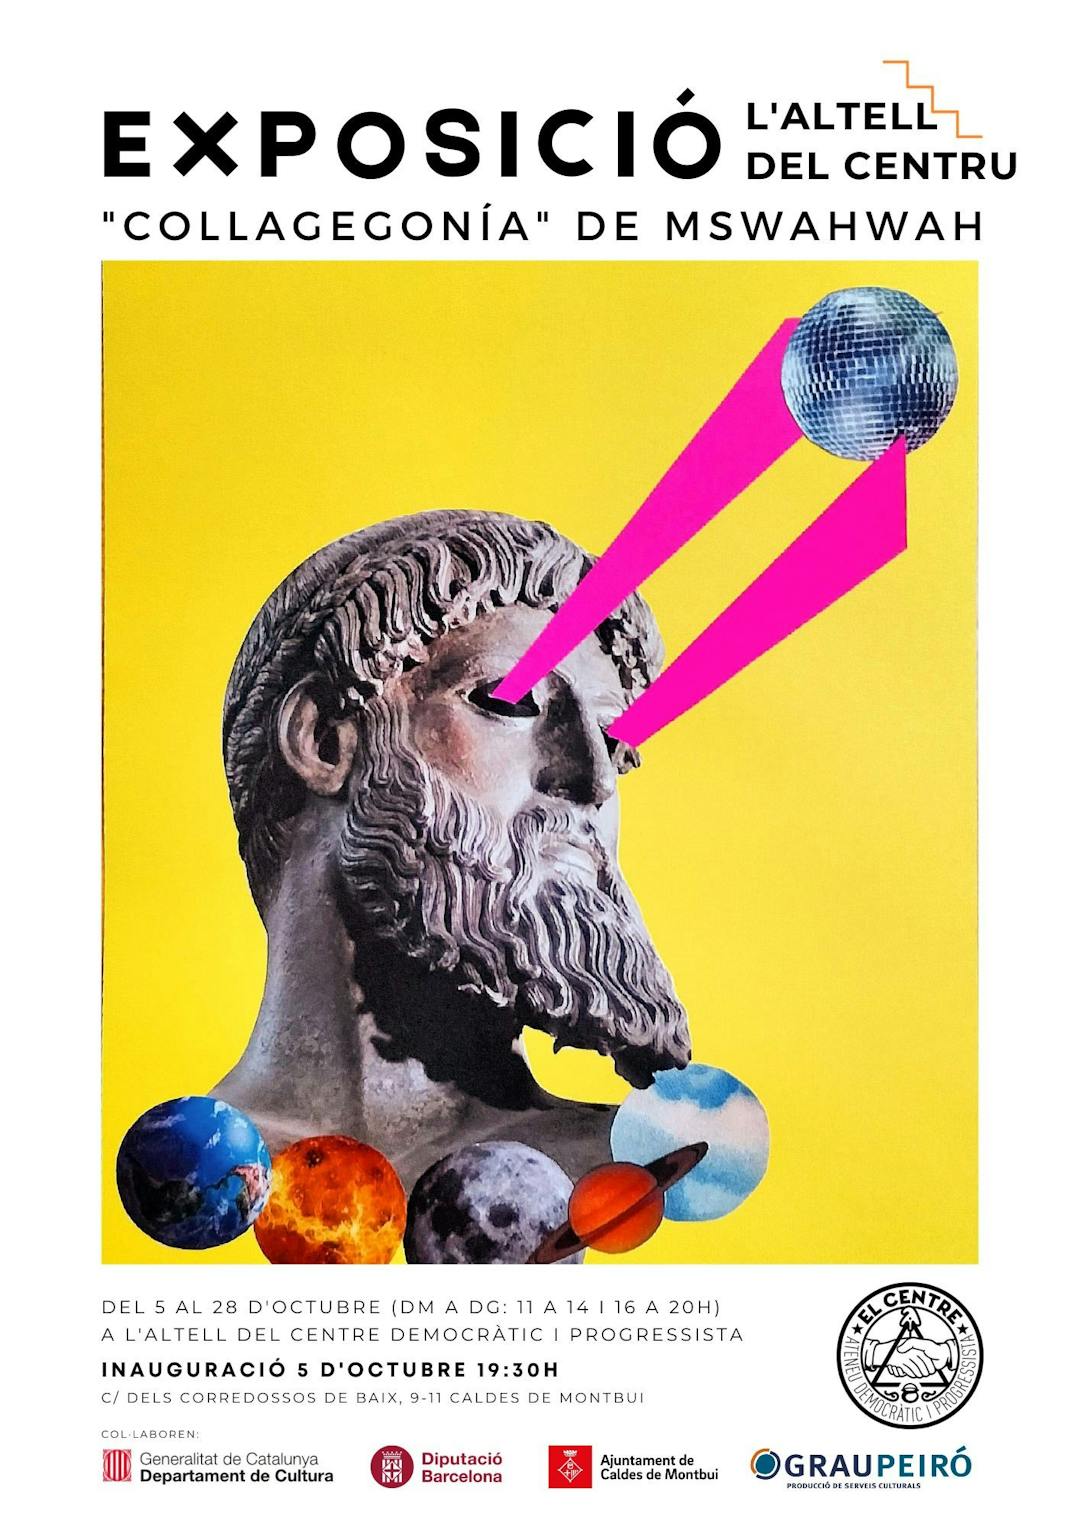 Exposició "Collagegonia" de Mswahwah